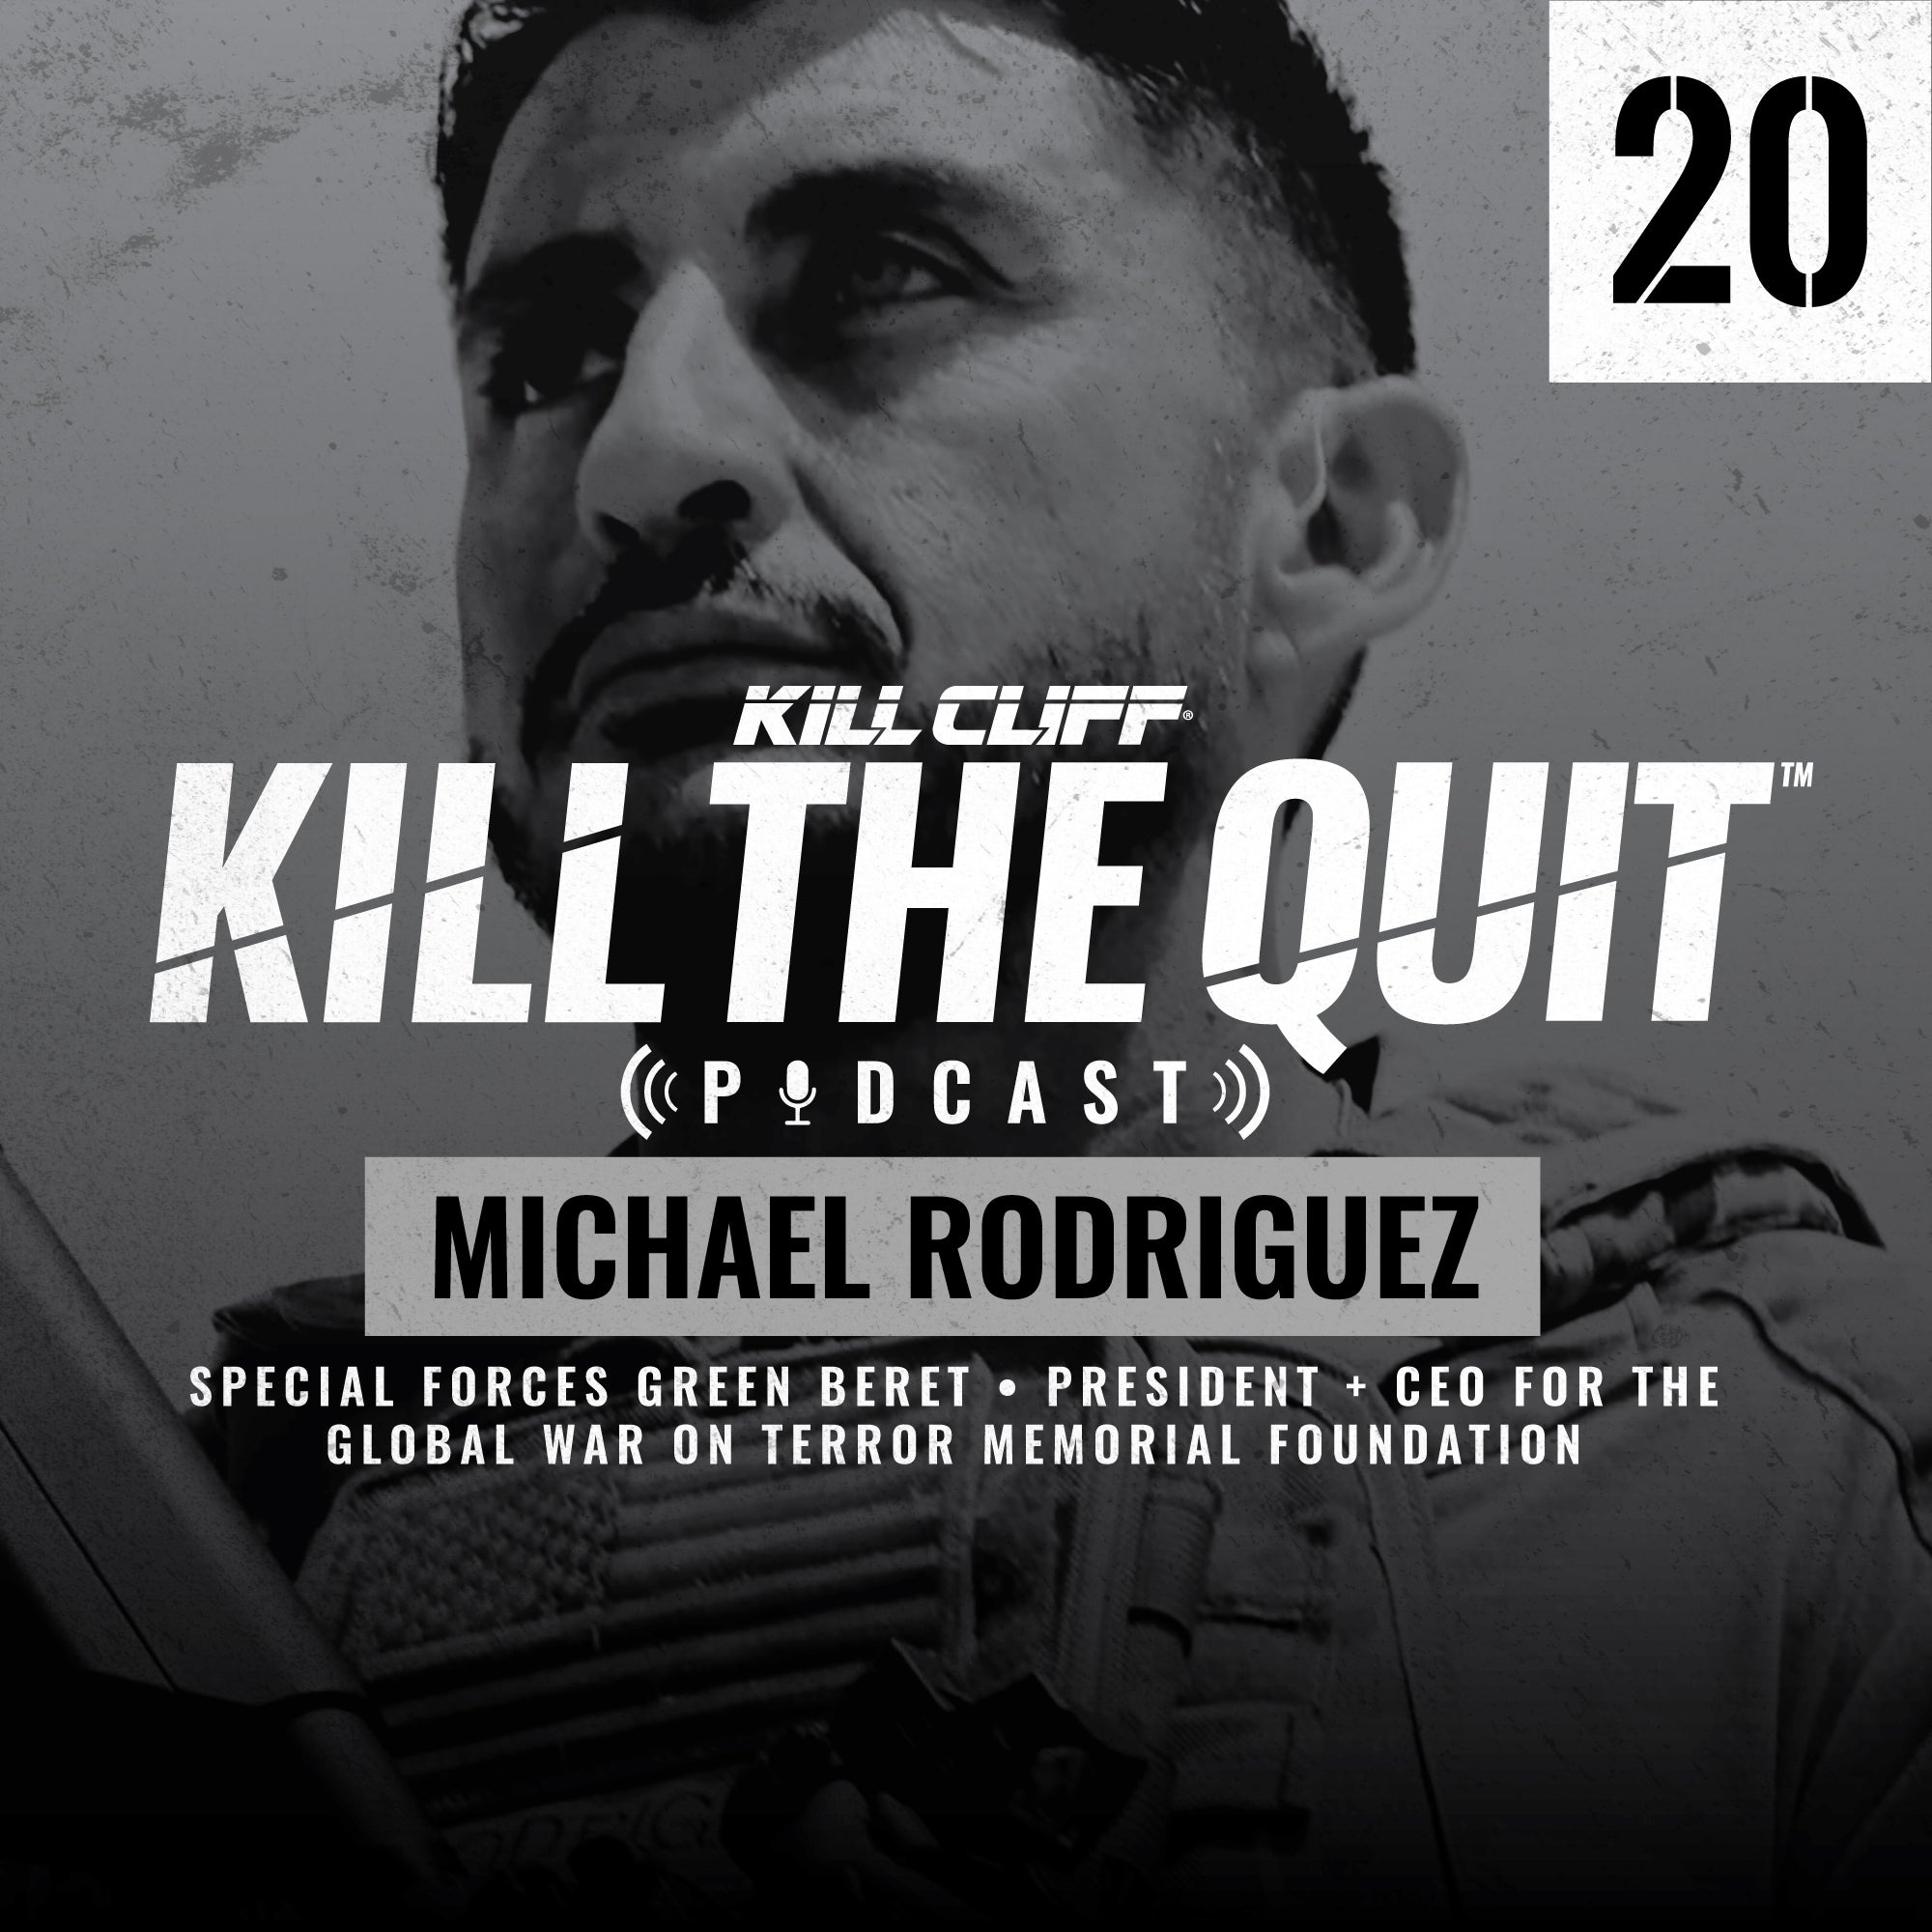 PODCAST Ep. 020 - Michael Rodriguez - Kill Cliff